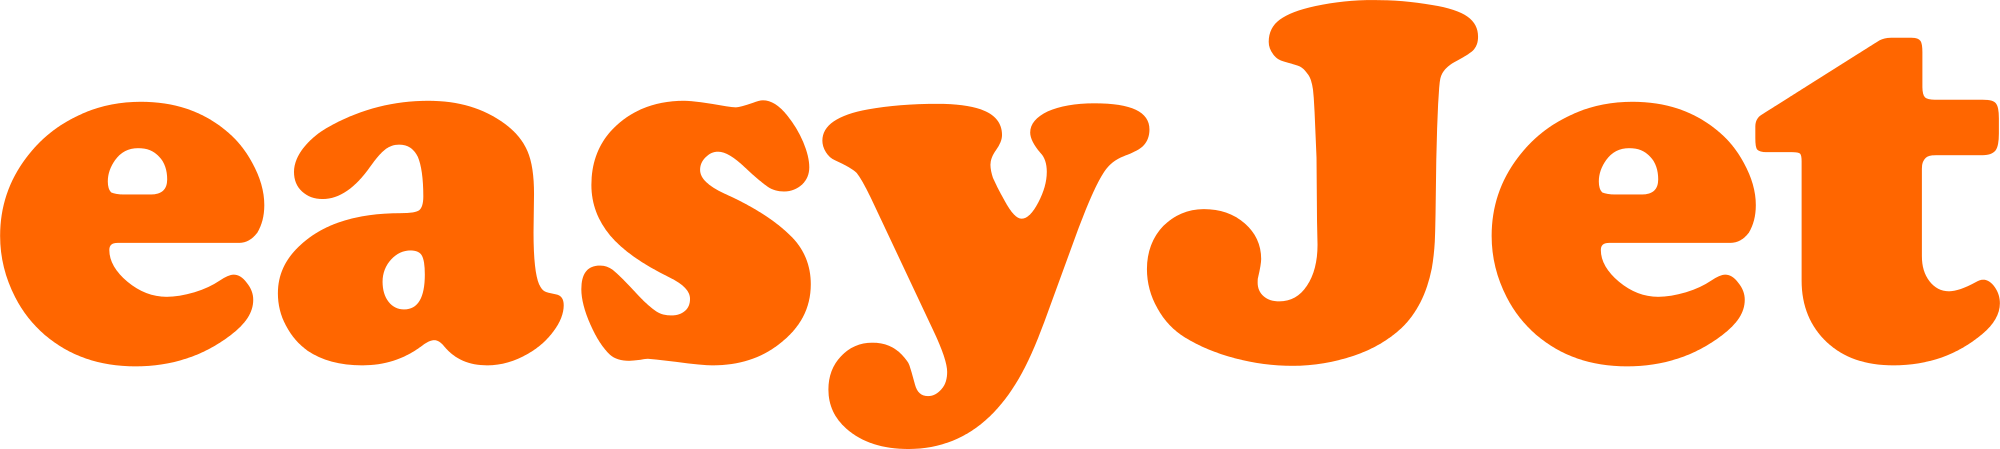 easyJet Logo - EasyJet logo.svg